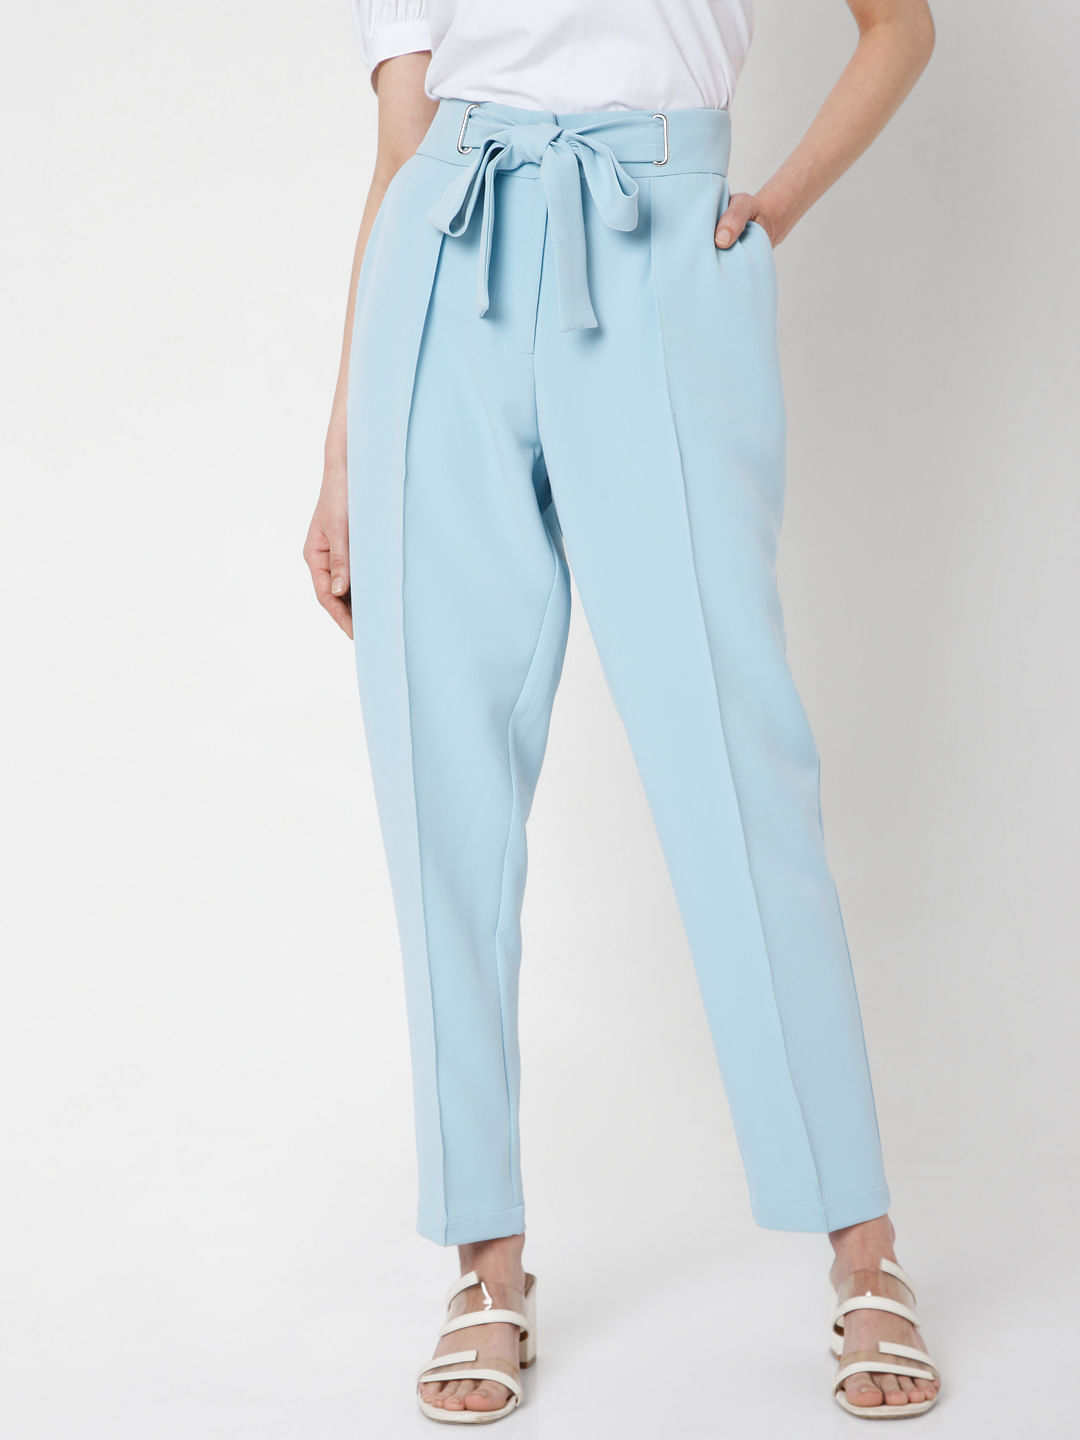 Buy Light Blue Trousers  Pants for Men by NETPLAY Online  Ajiocom